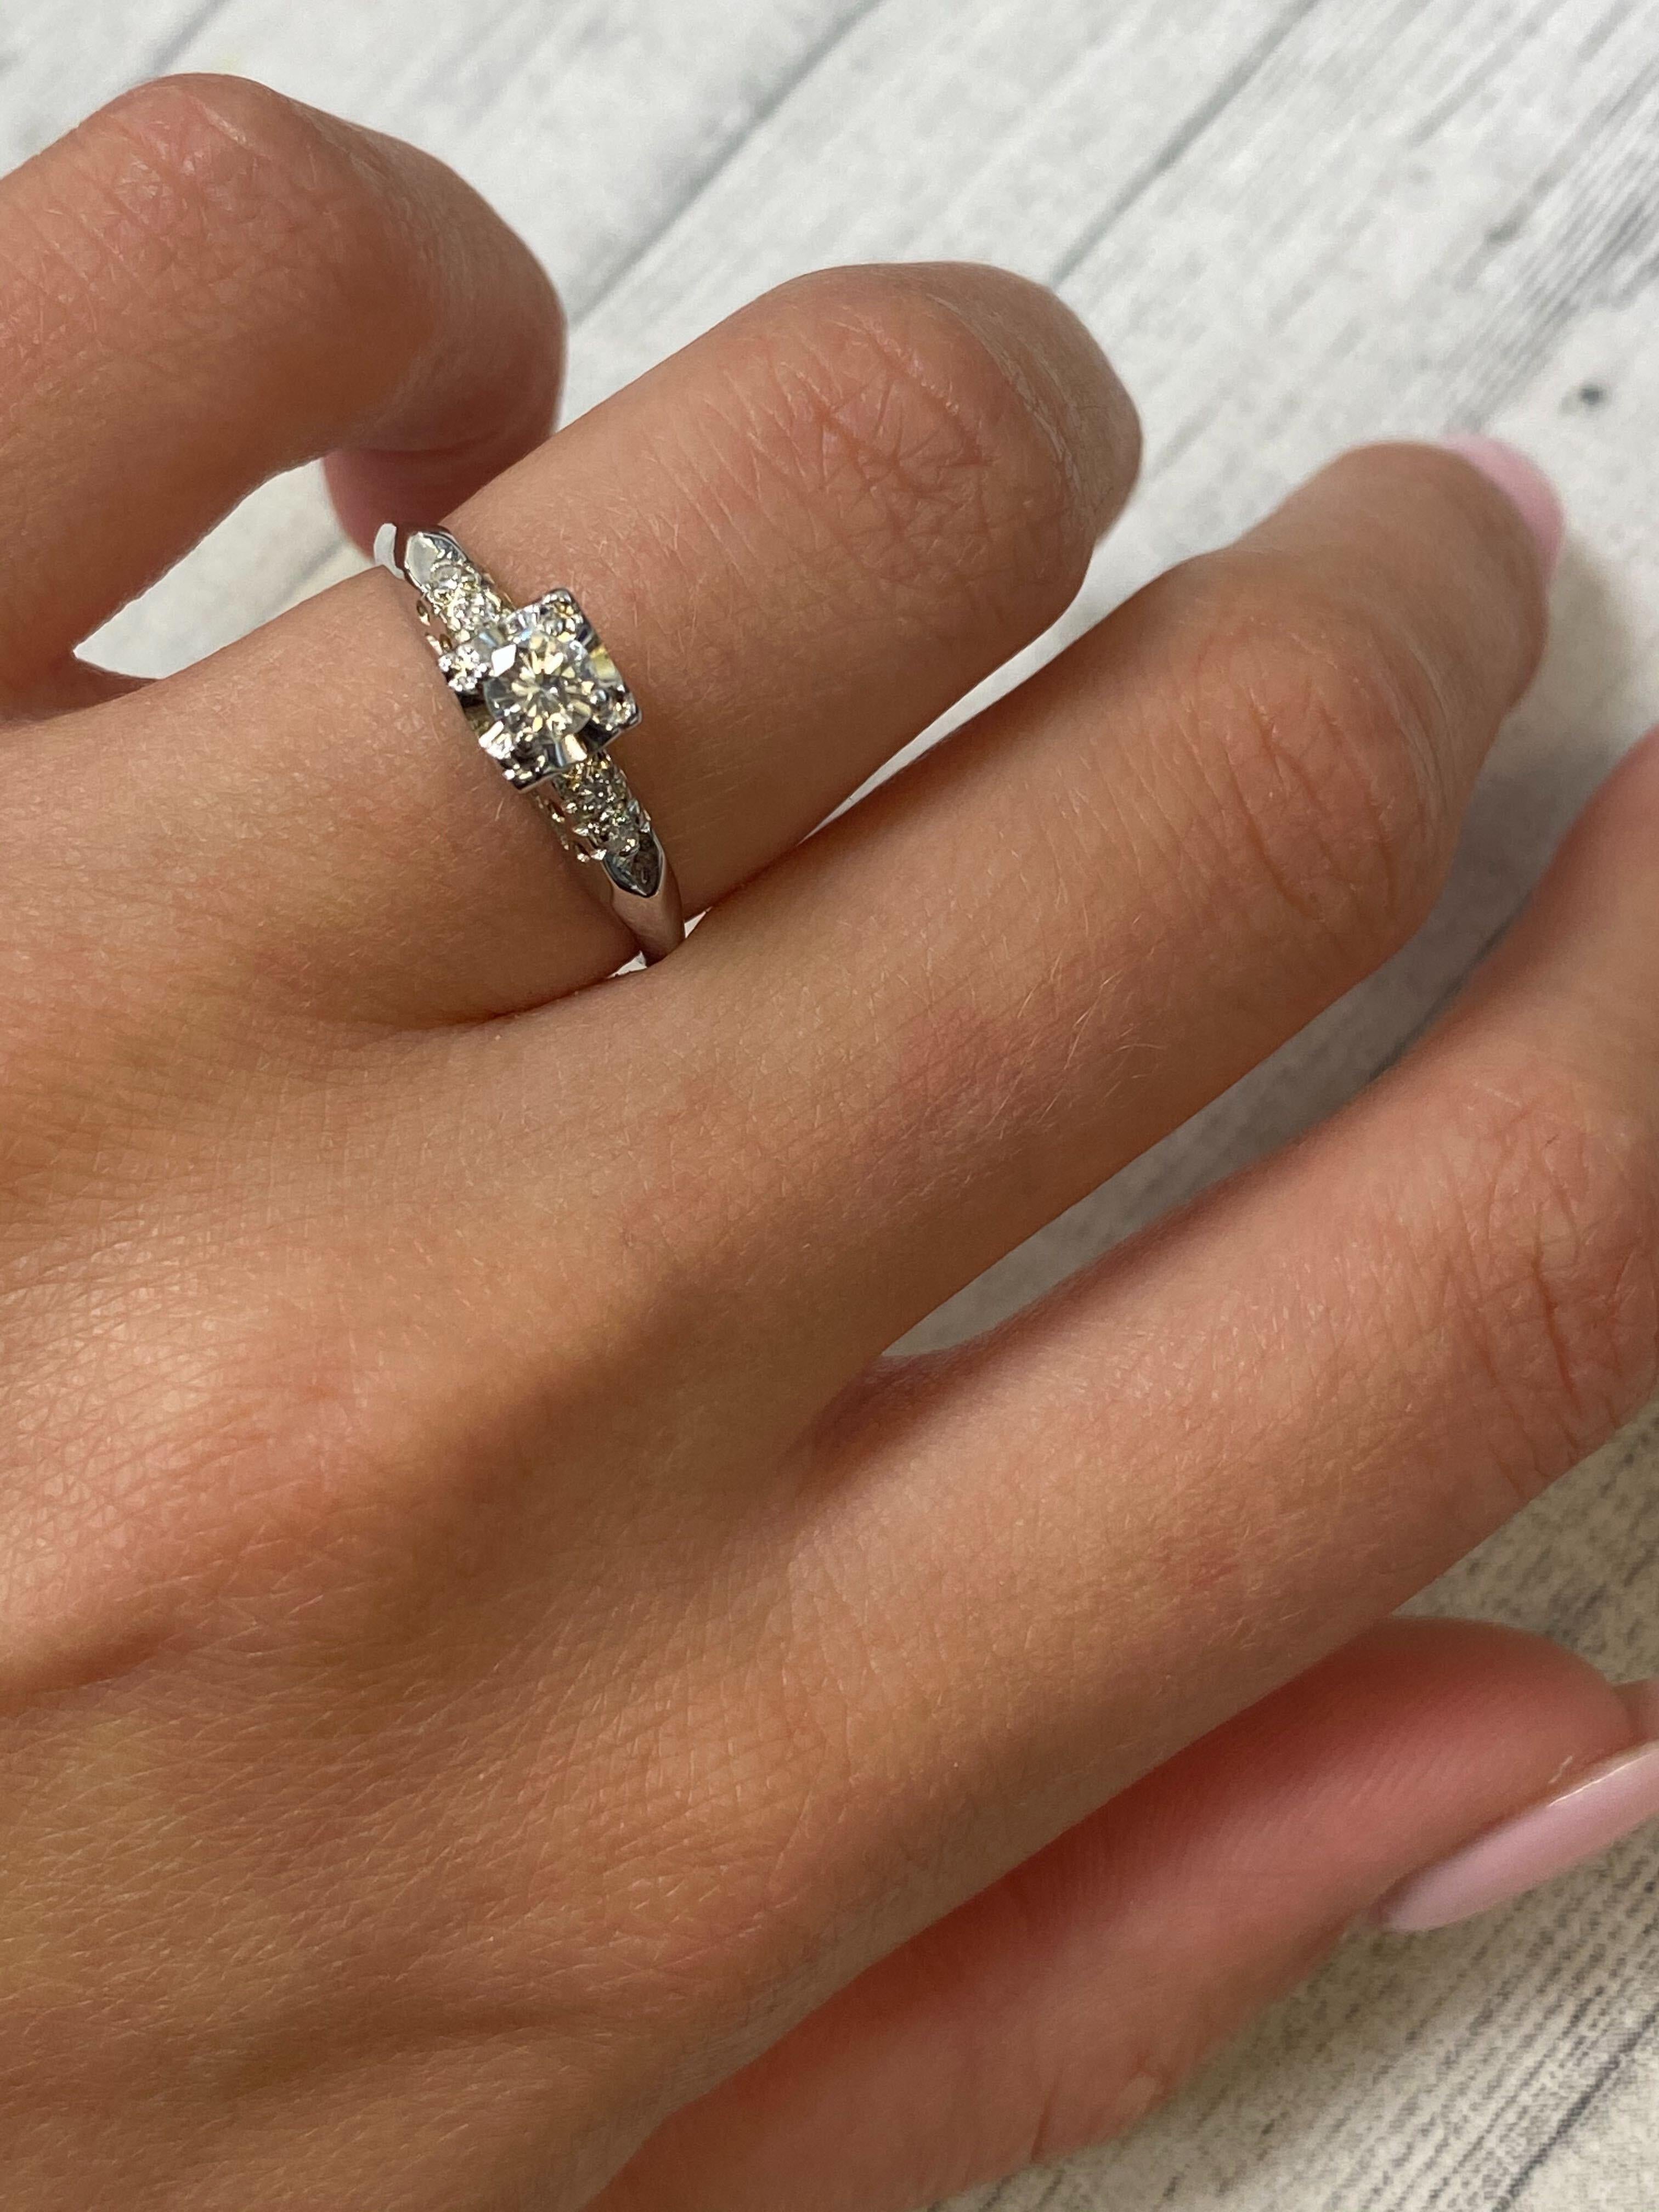 Rachel Koen 14 Karat White Gold Diamond Engagement Ring 0.25 Carat In New Condition For Sale In New York, NY